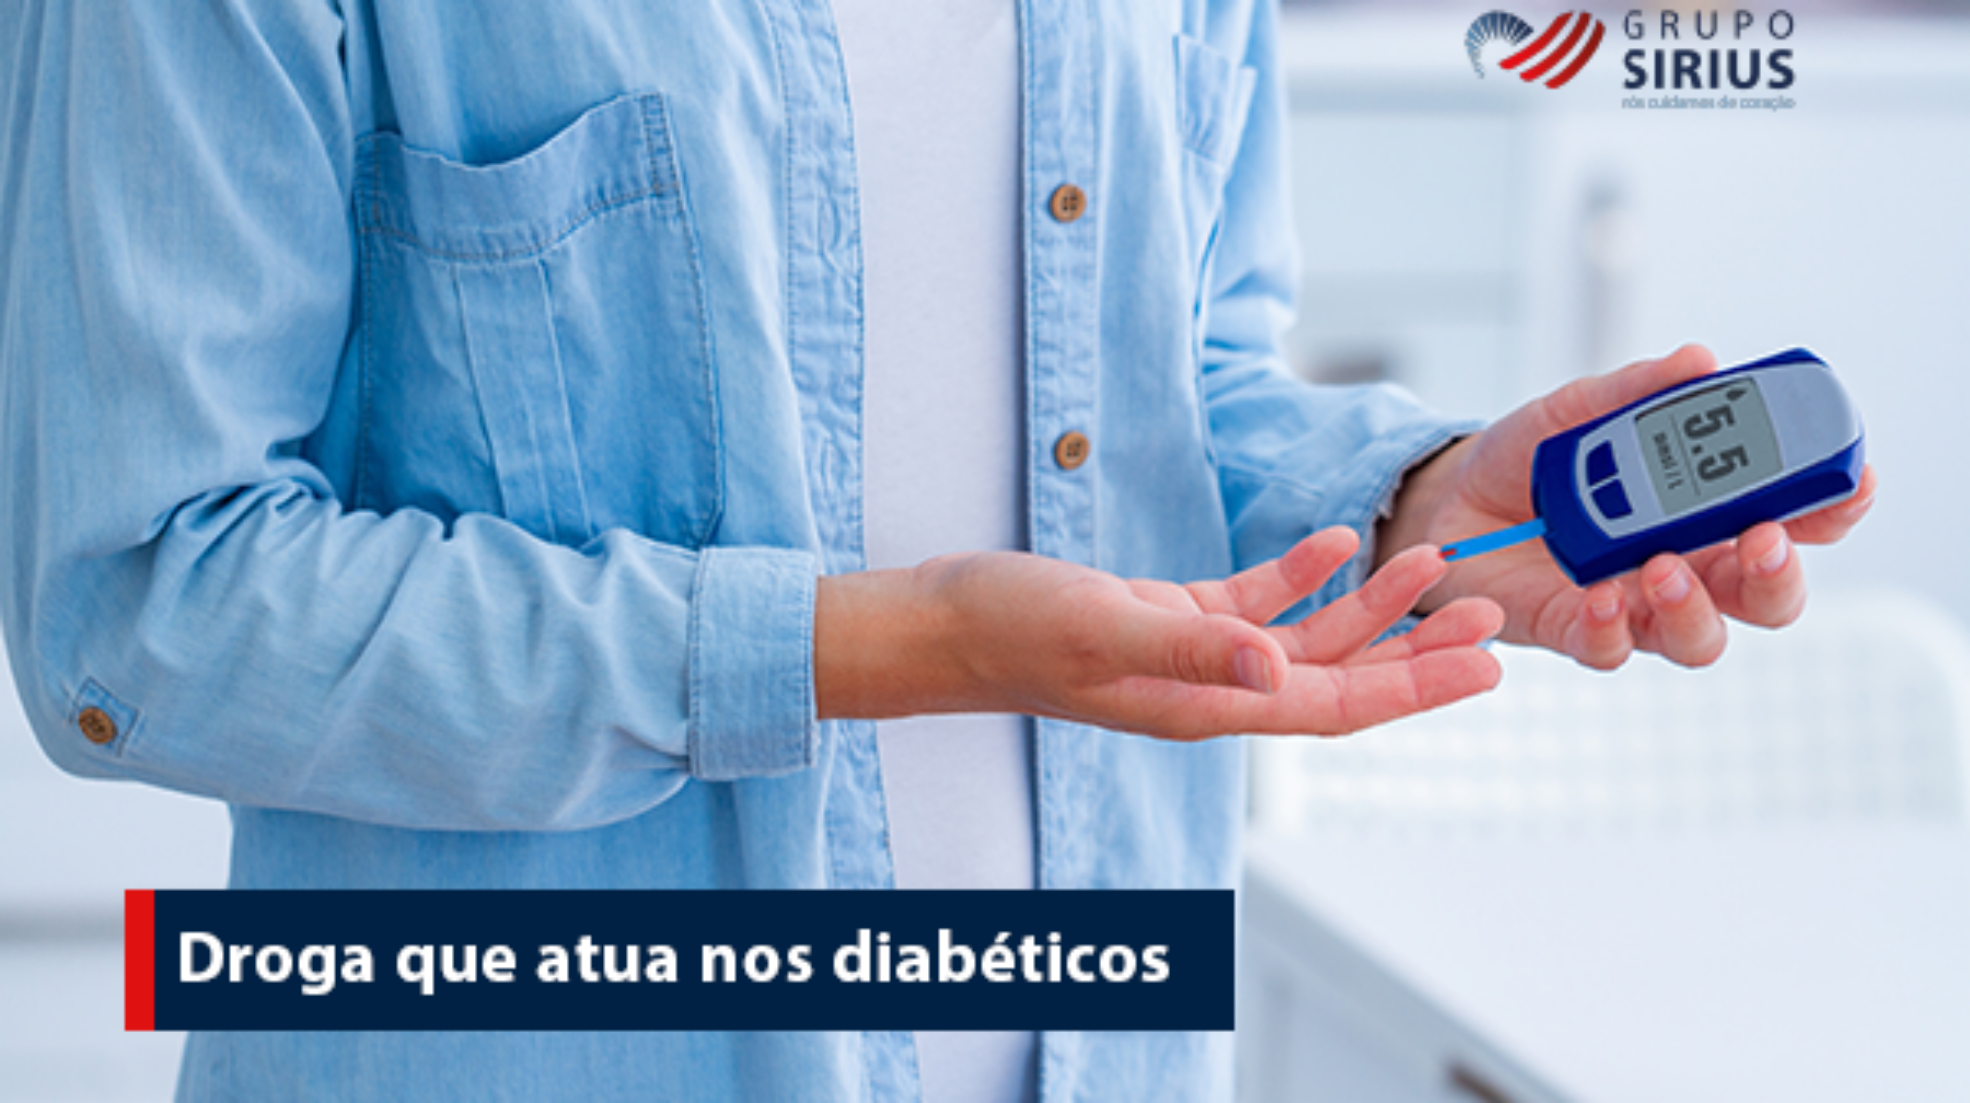 Sirius-08-Droga-que-atua-nos-diabeticos-perda-de-peso